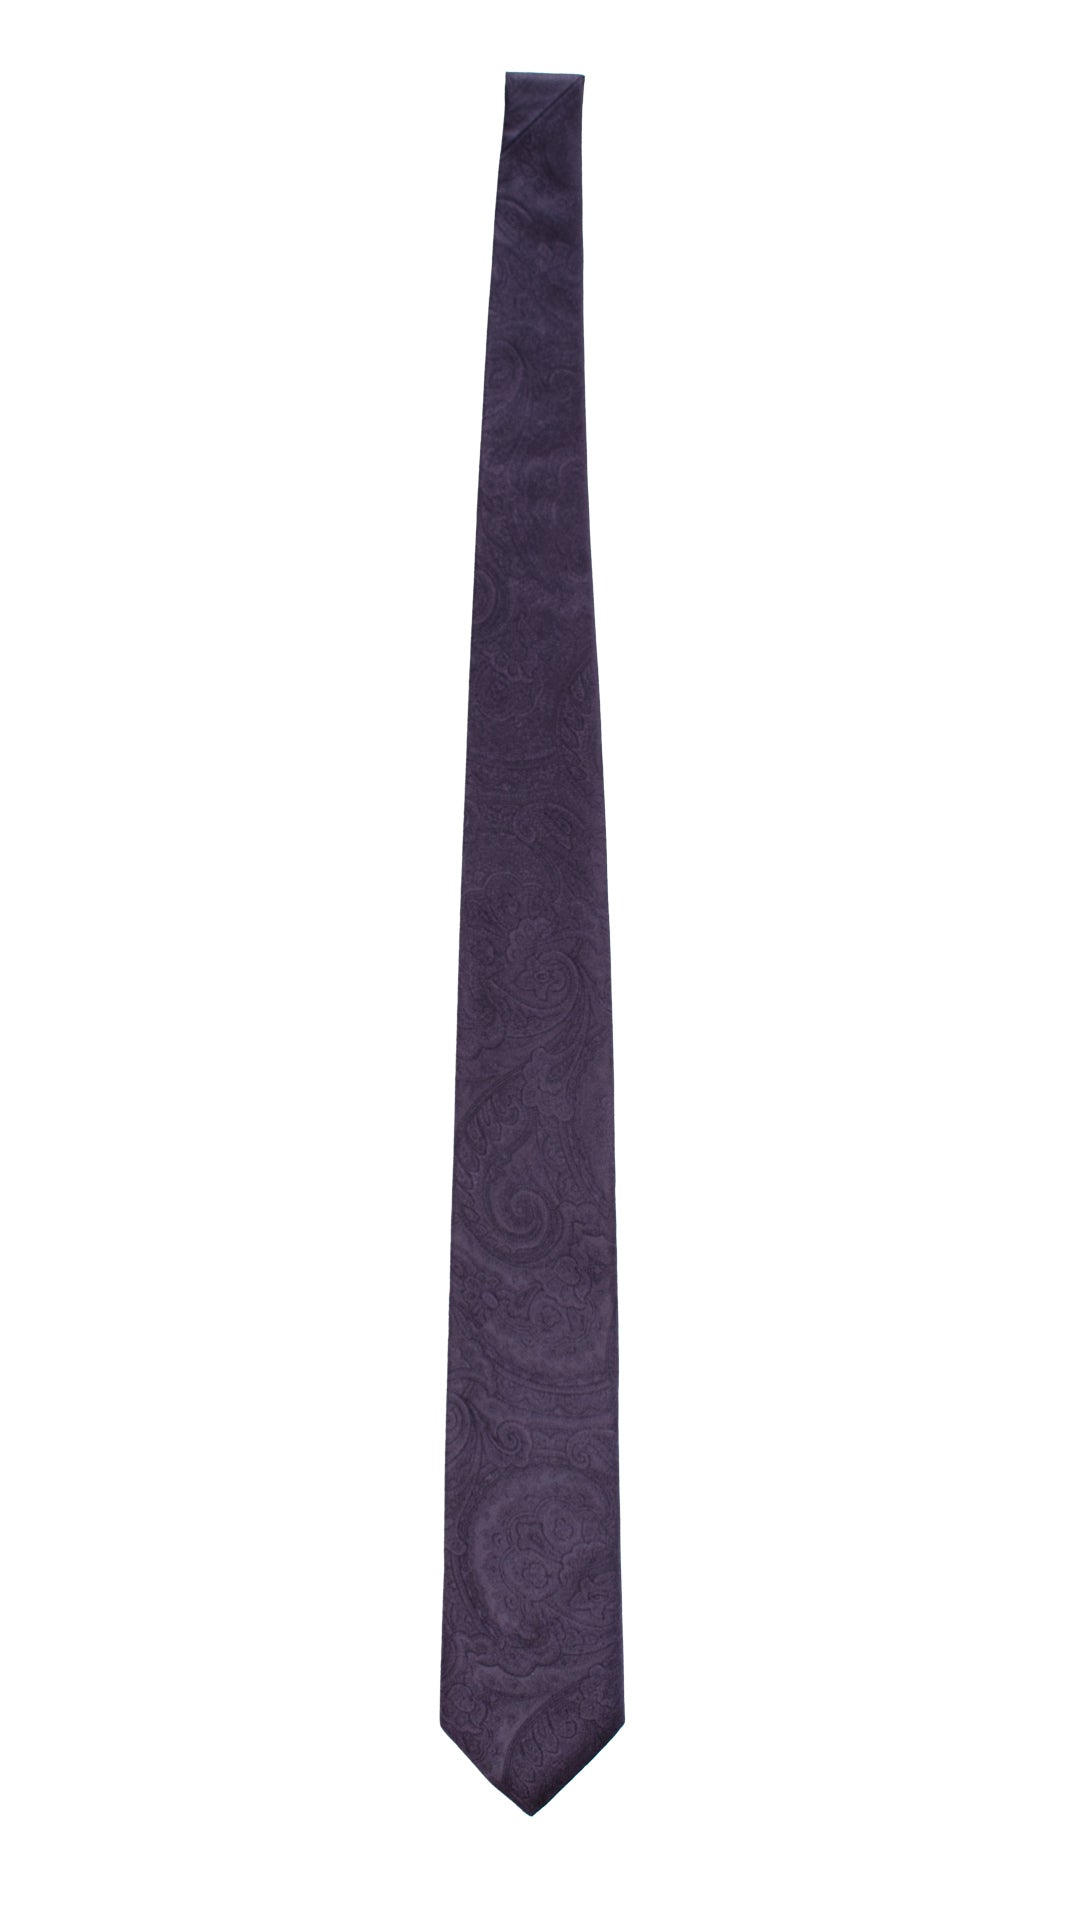 Cravatta da Cerimonia di Seta Blu Paisley Tono su Tono CY6564 Pala